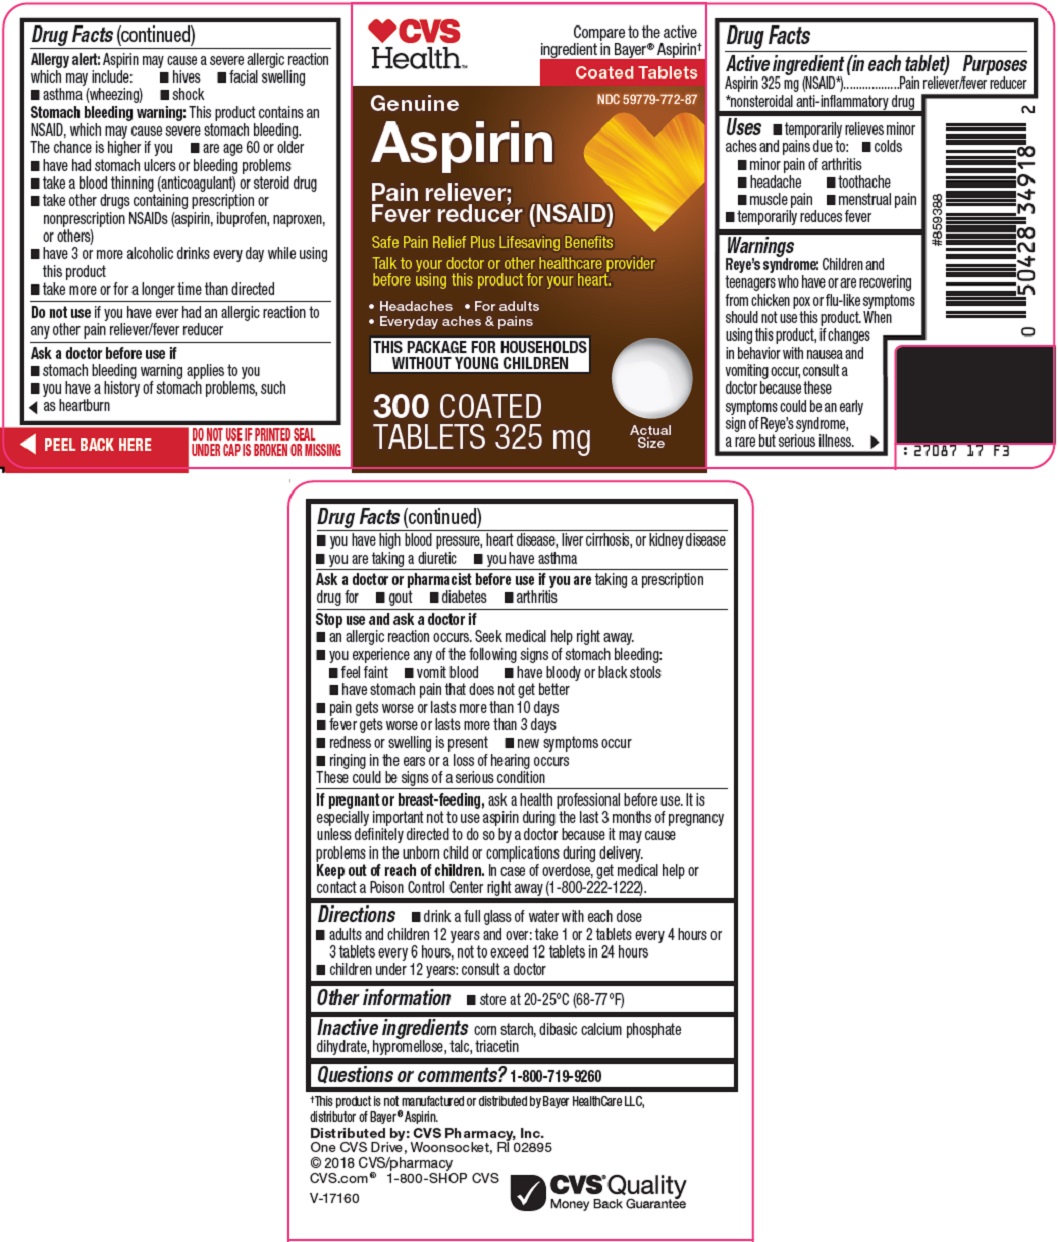 aspirin-image